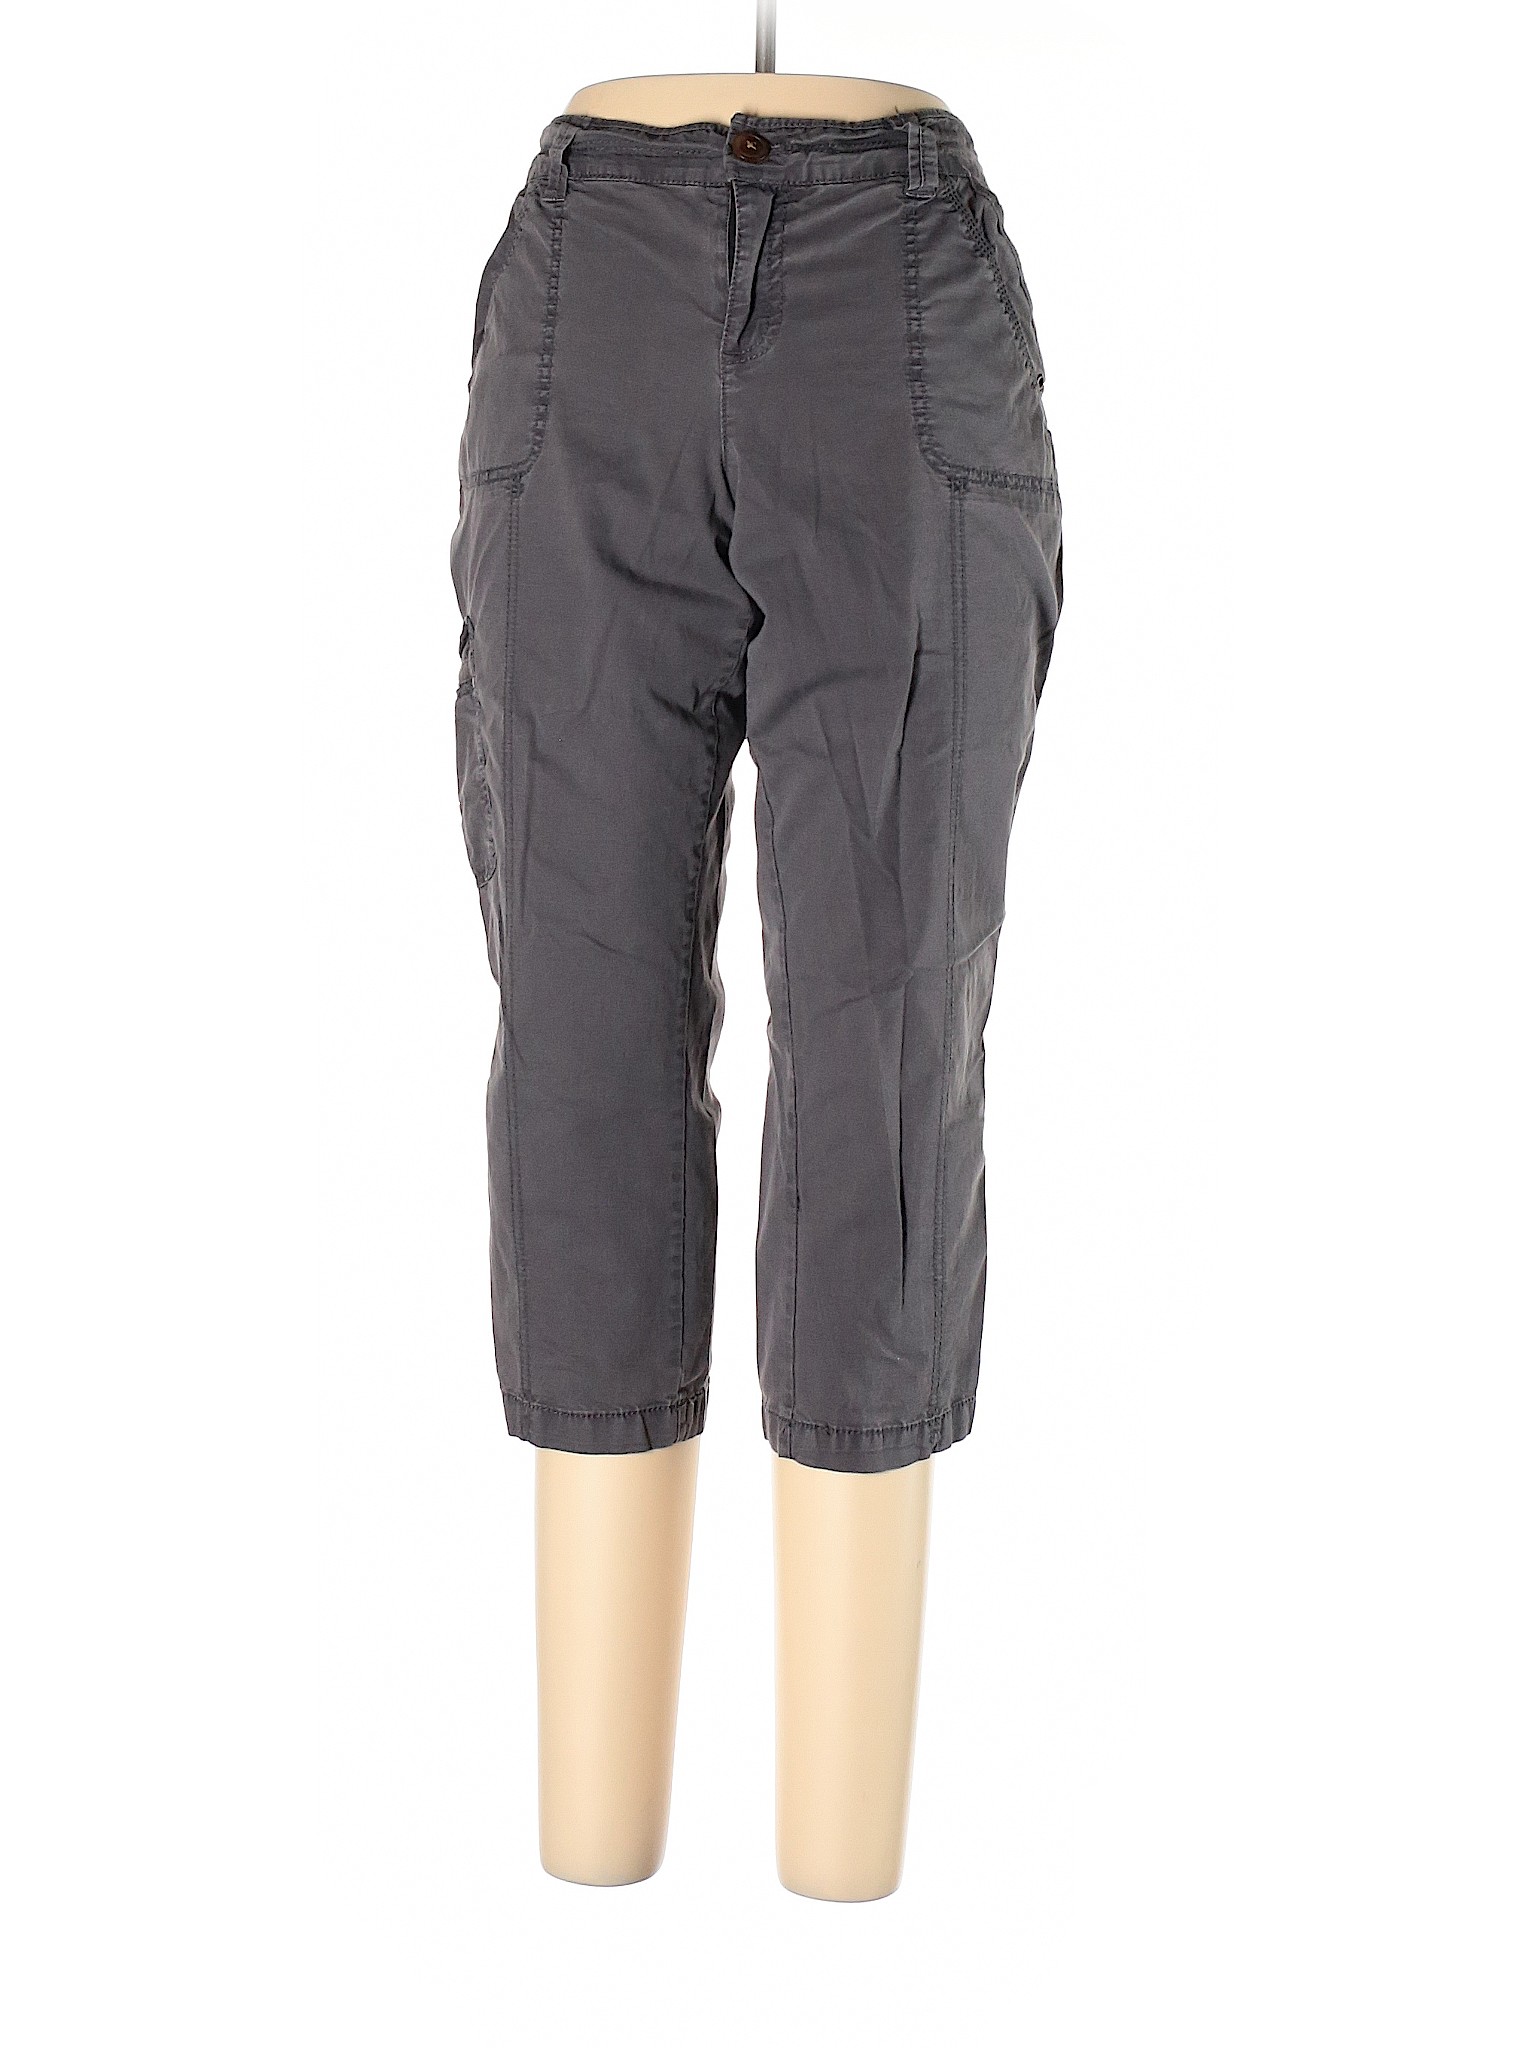 Maurices Women Gray Cargo Pants 13 | eBay